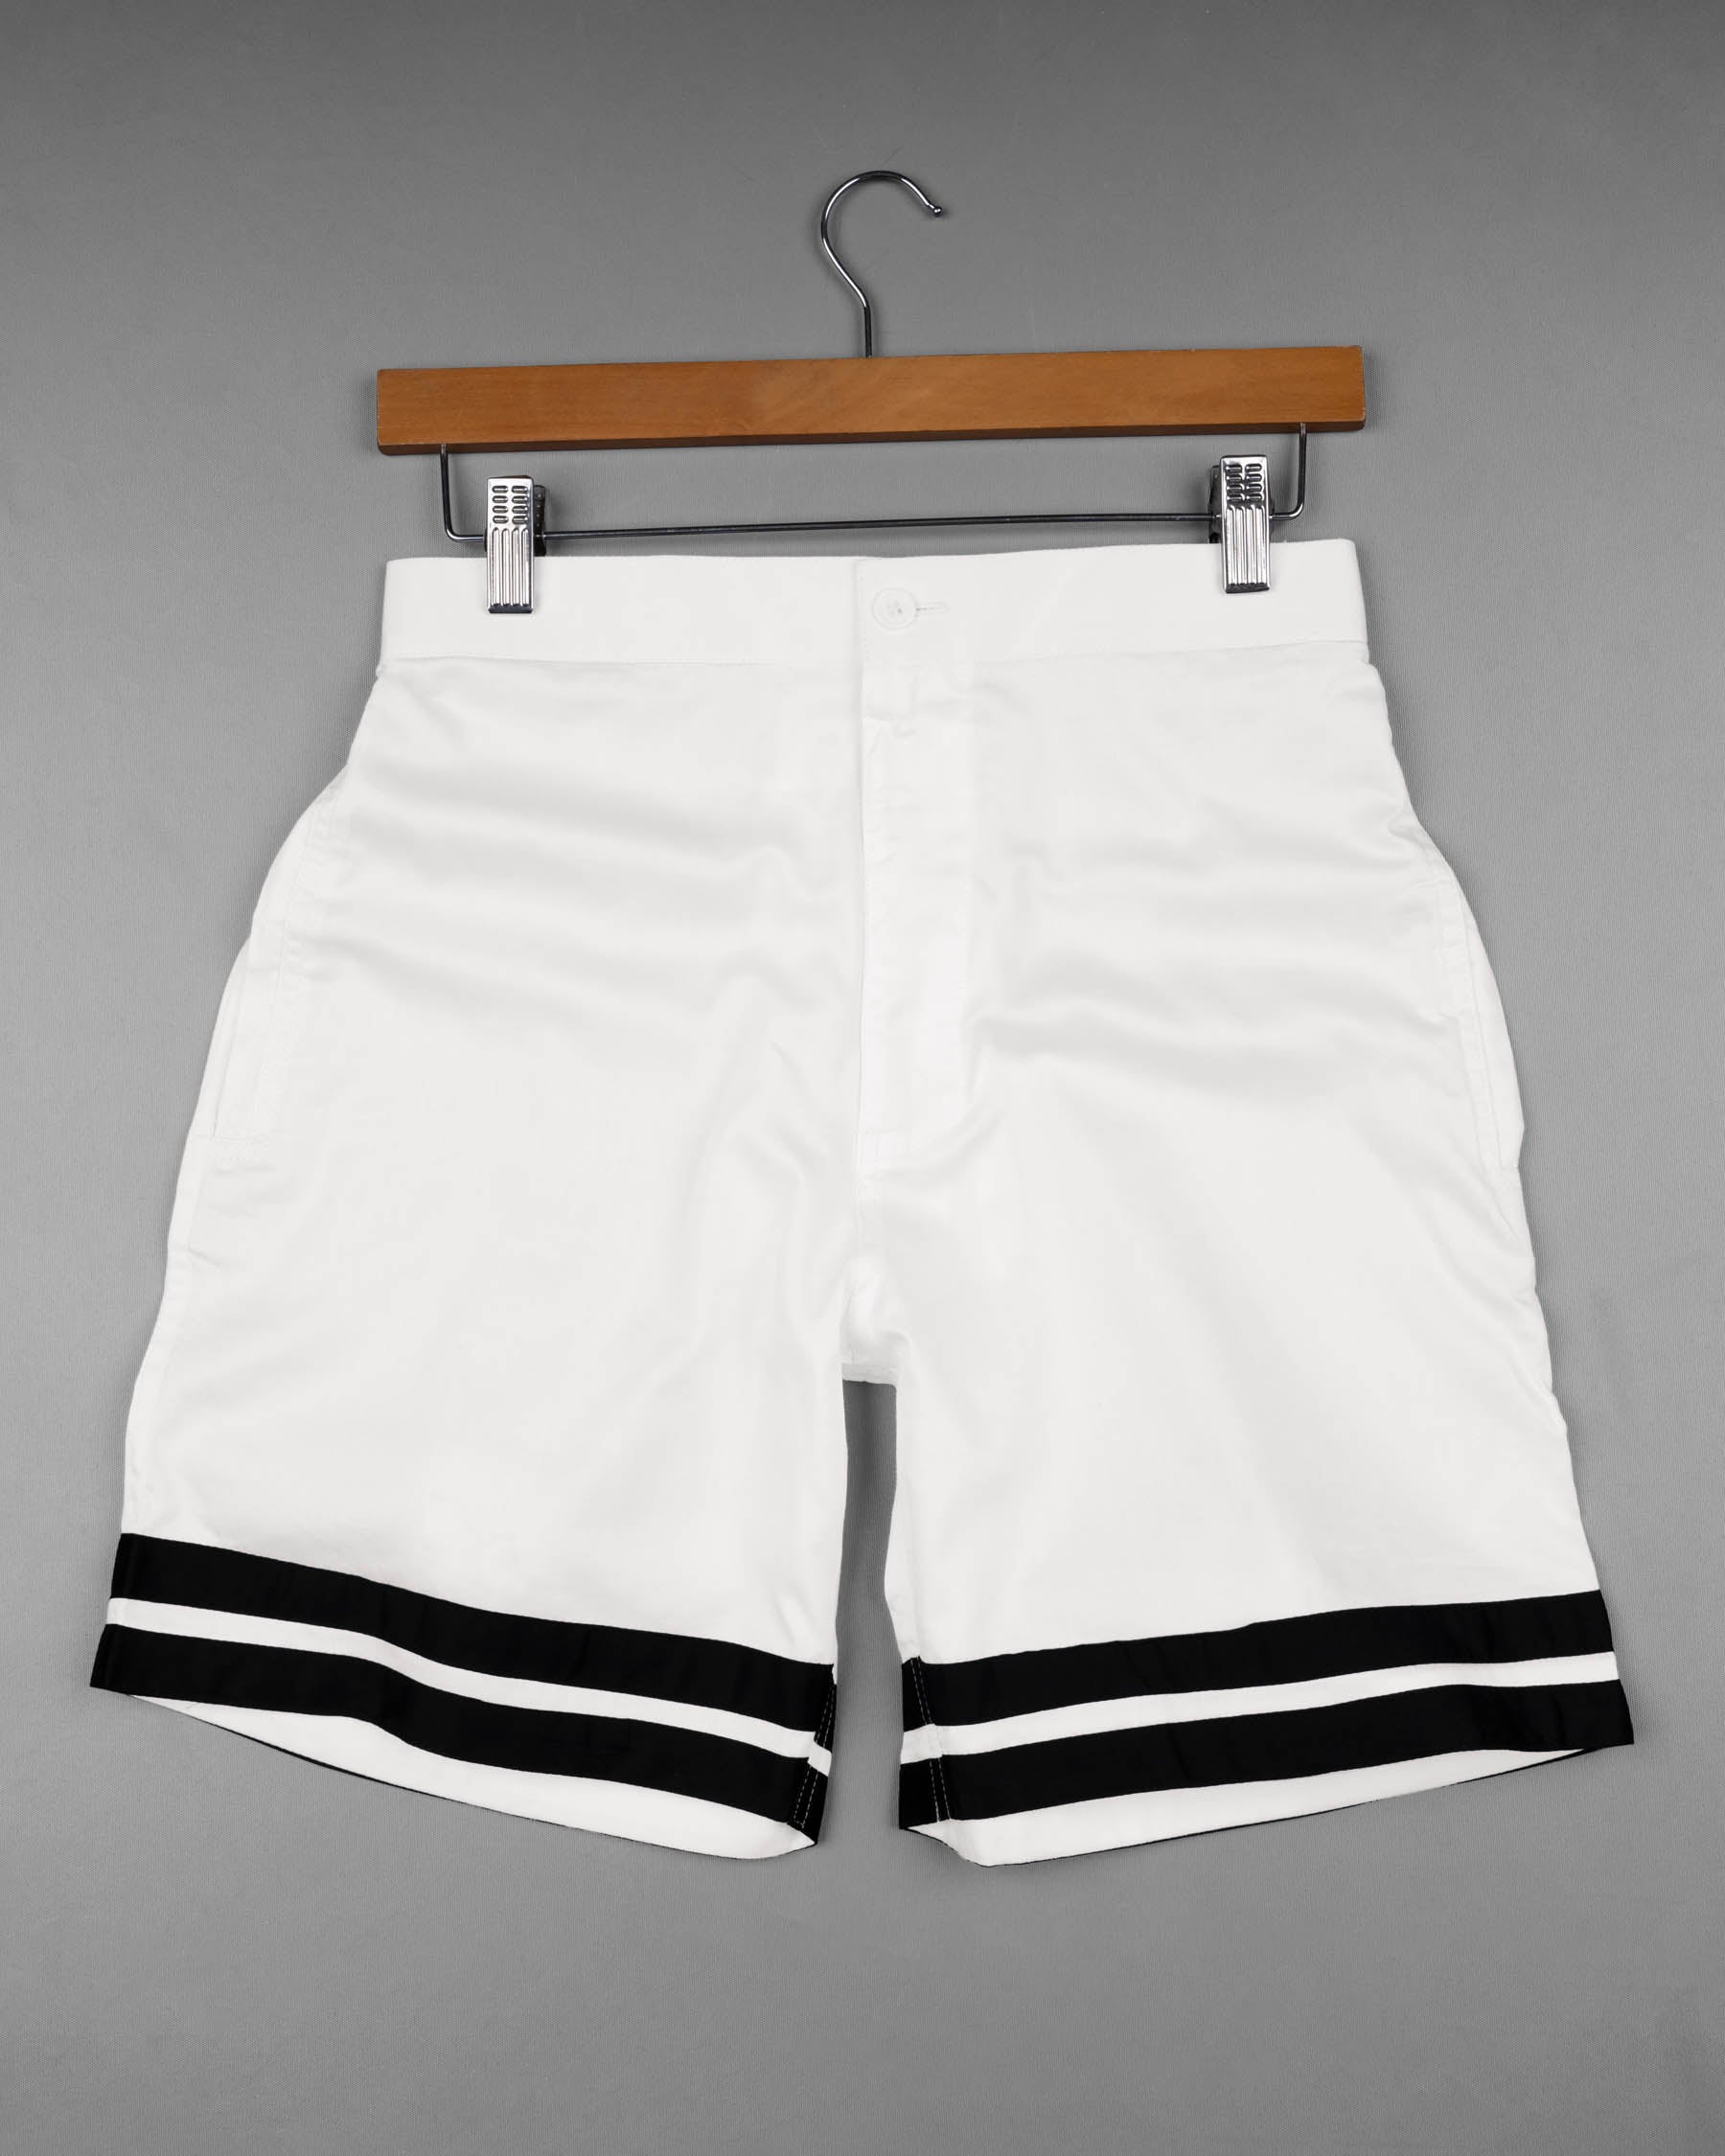 Jade Black and Bright White Contrast horizontal Striped Super Soft Premium Cotton Designer Shorts SR148-28, SR148-30, SR148-32, SR148-34, SR148-36, SR148-38, SR148-40, SR148-42, SR148-44